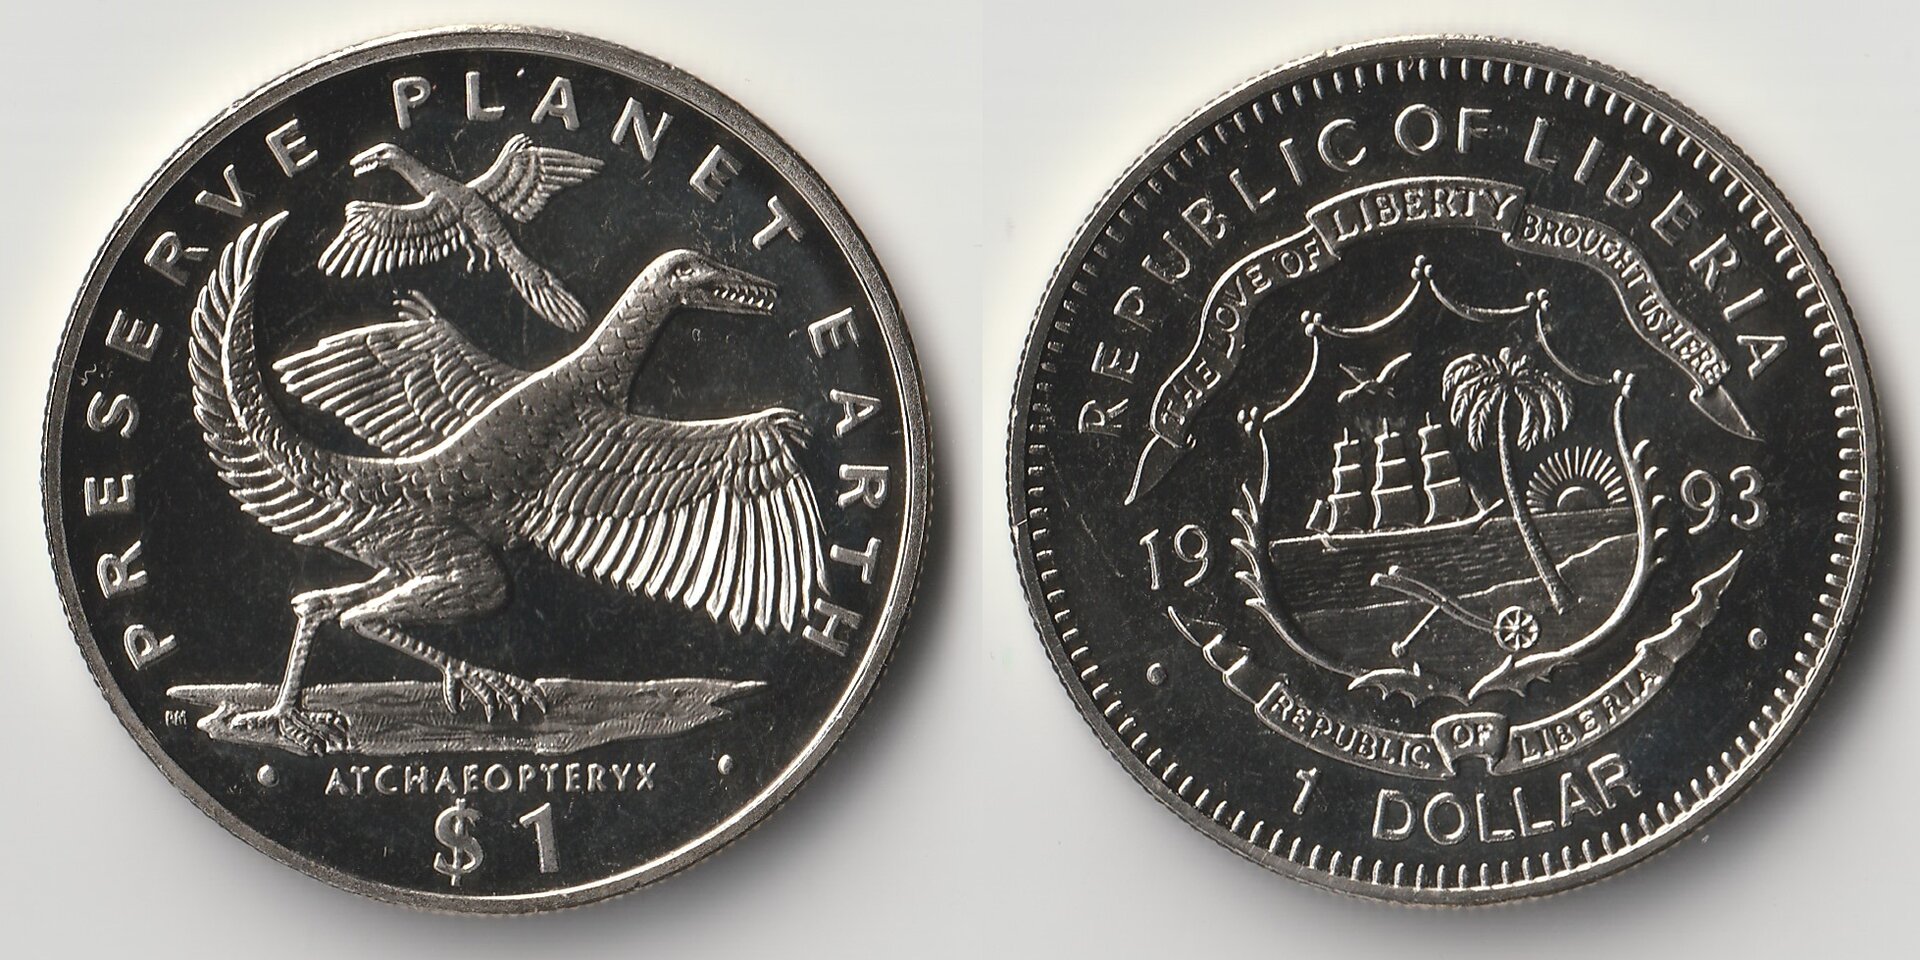 1993 liberia 1 dollar acheopteryx.jpg